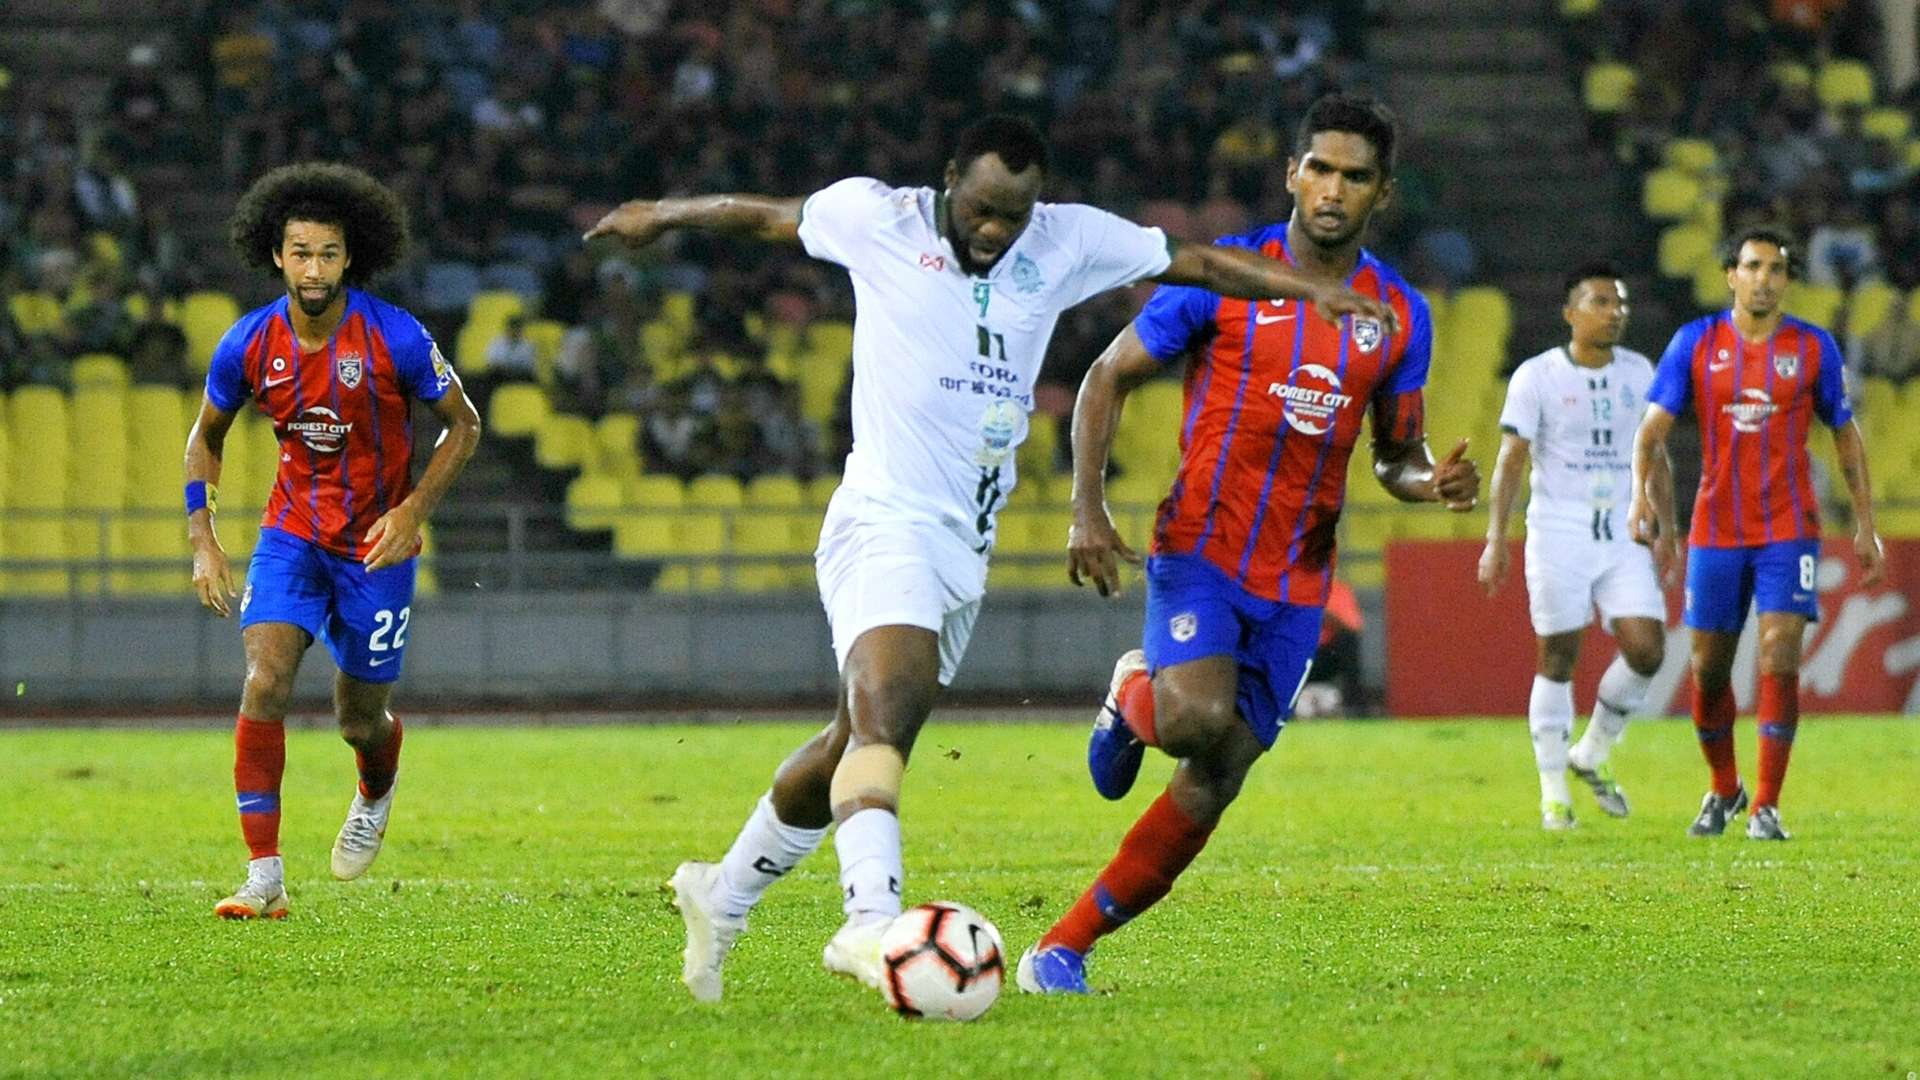 Davy Angan, Melaka v Johor Darul Ta'zim, Malaysia Super League, 25 June 2019